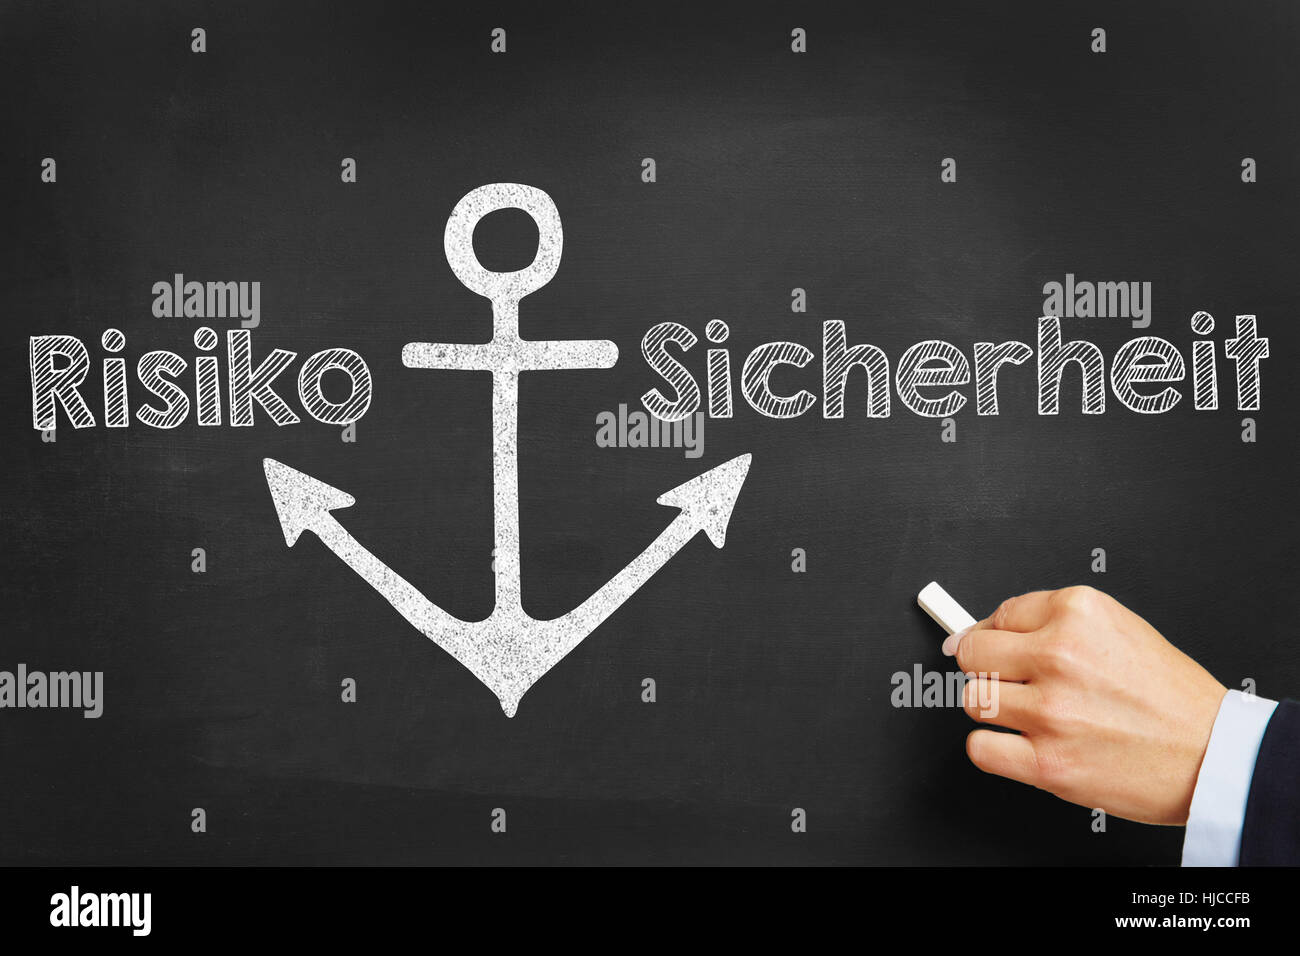 Hand writing German words 'Risiko' (risk) and 'Sicherheit' (safety) on blackboard Stock Photo